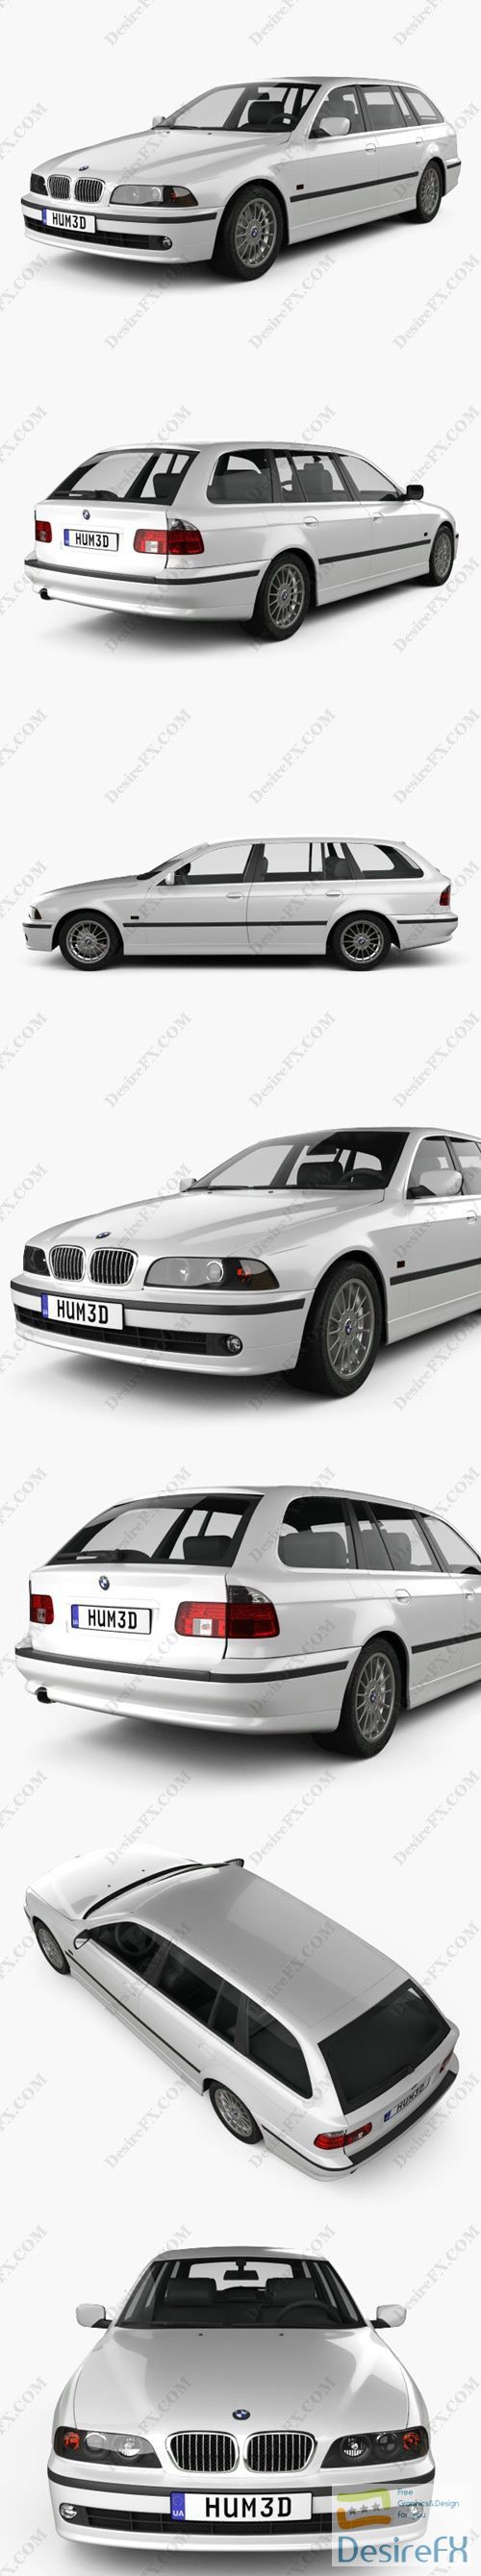 BMW 5 Series Touring 1999 3D Model